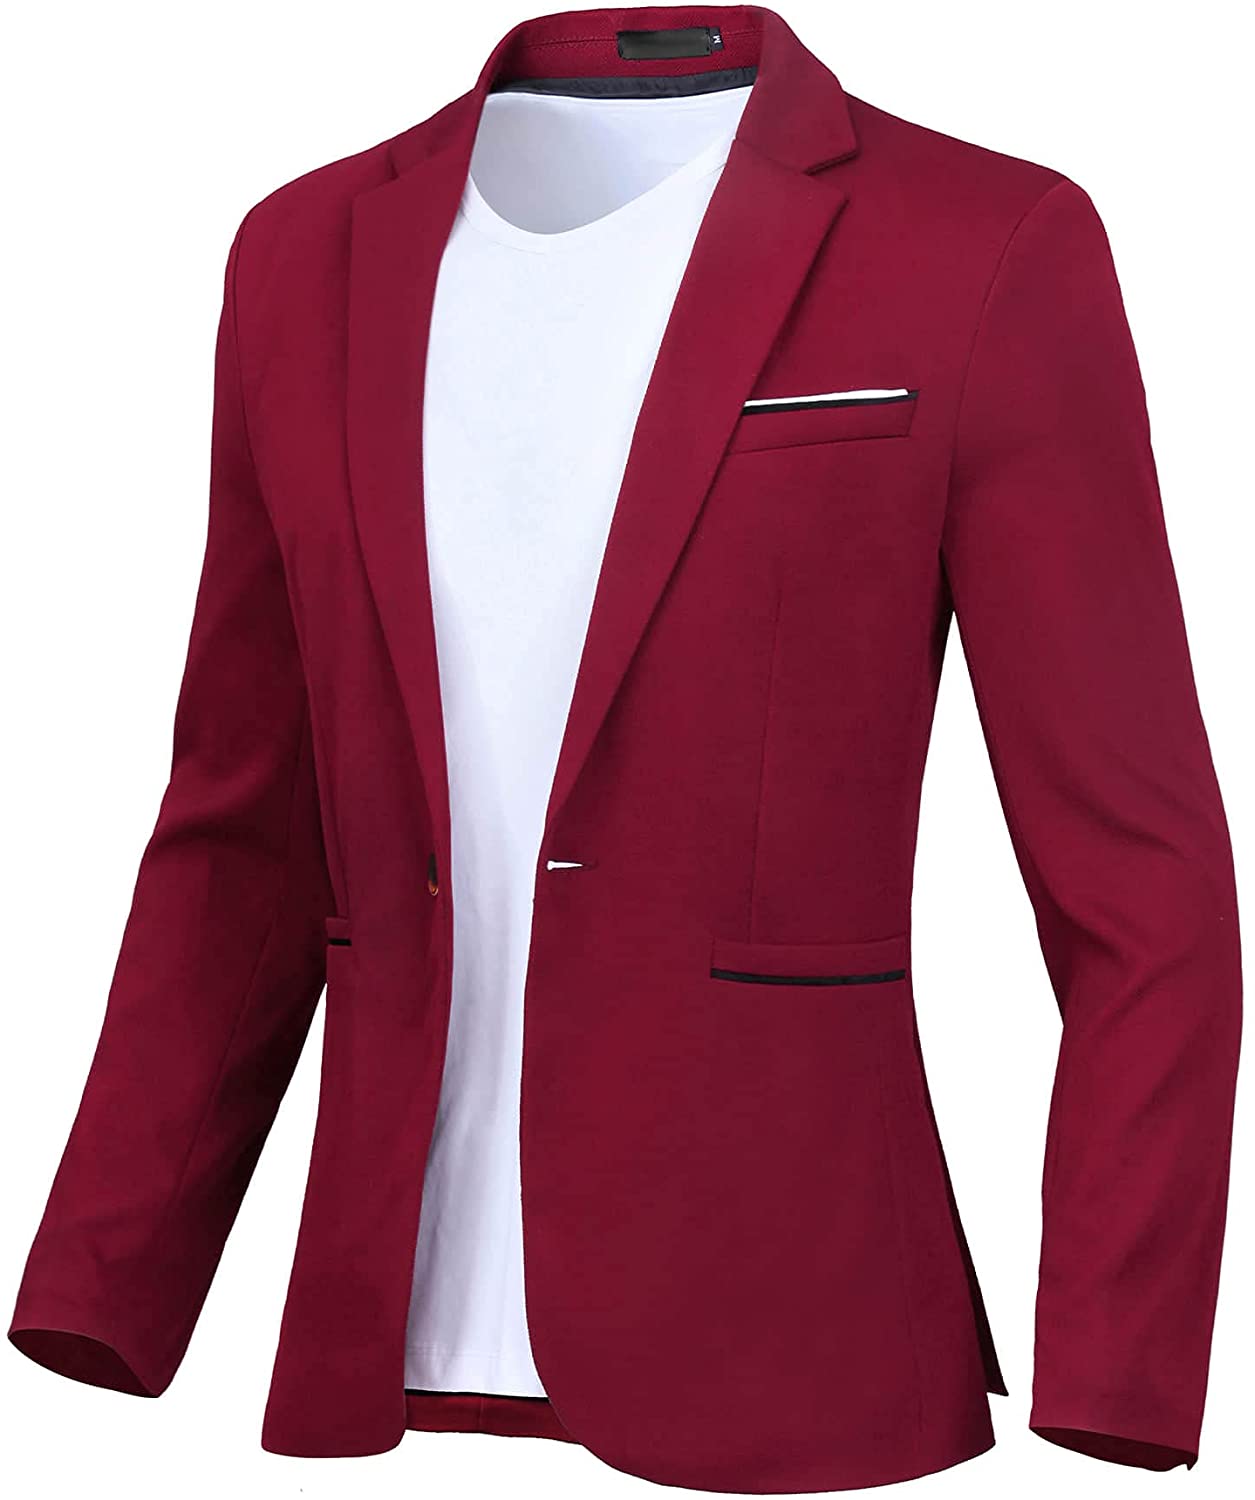 Men's Blazer One Button Slim Fit Lightweight Casual Sports Coat | eBay